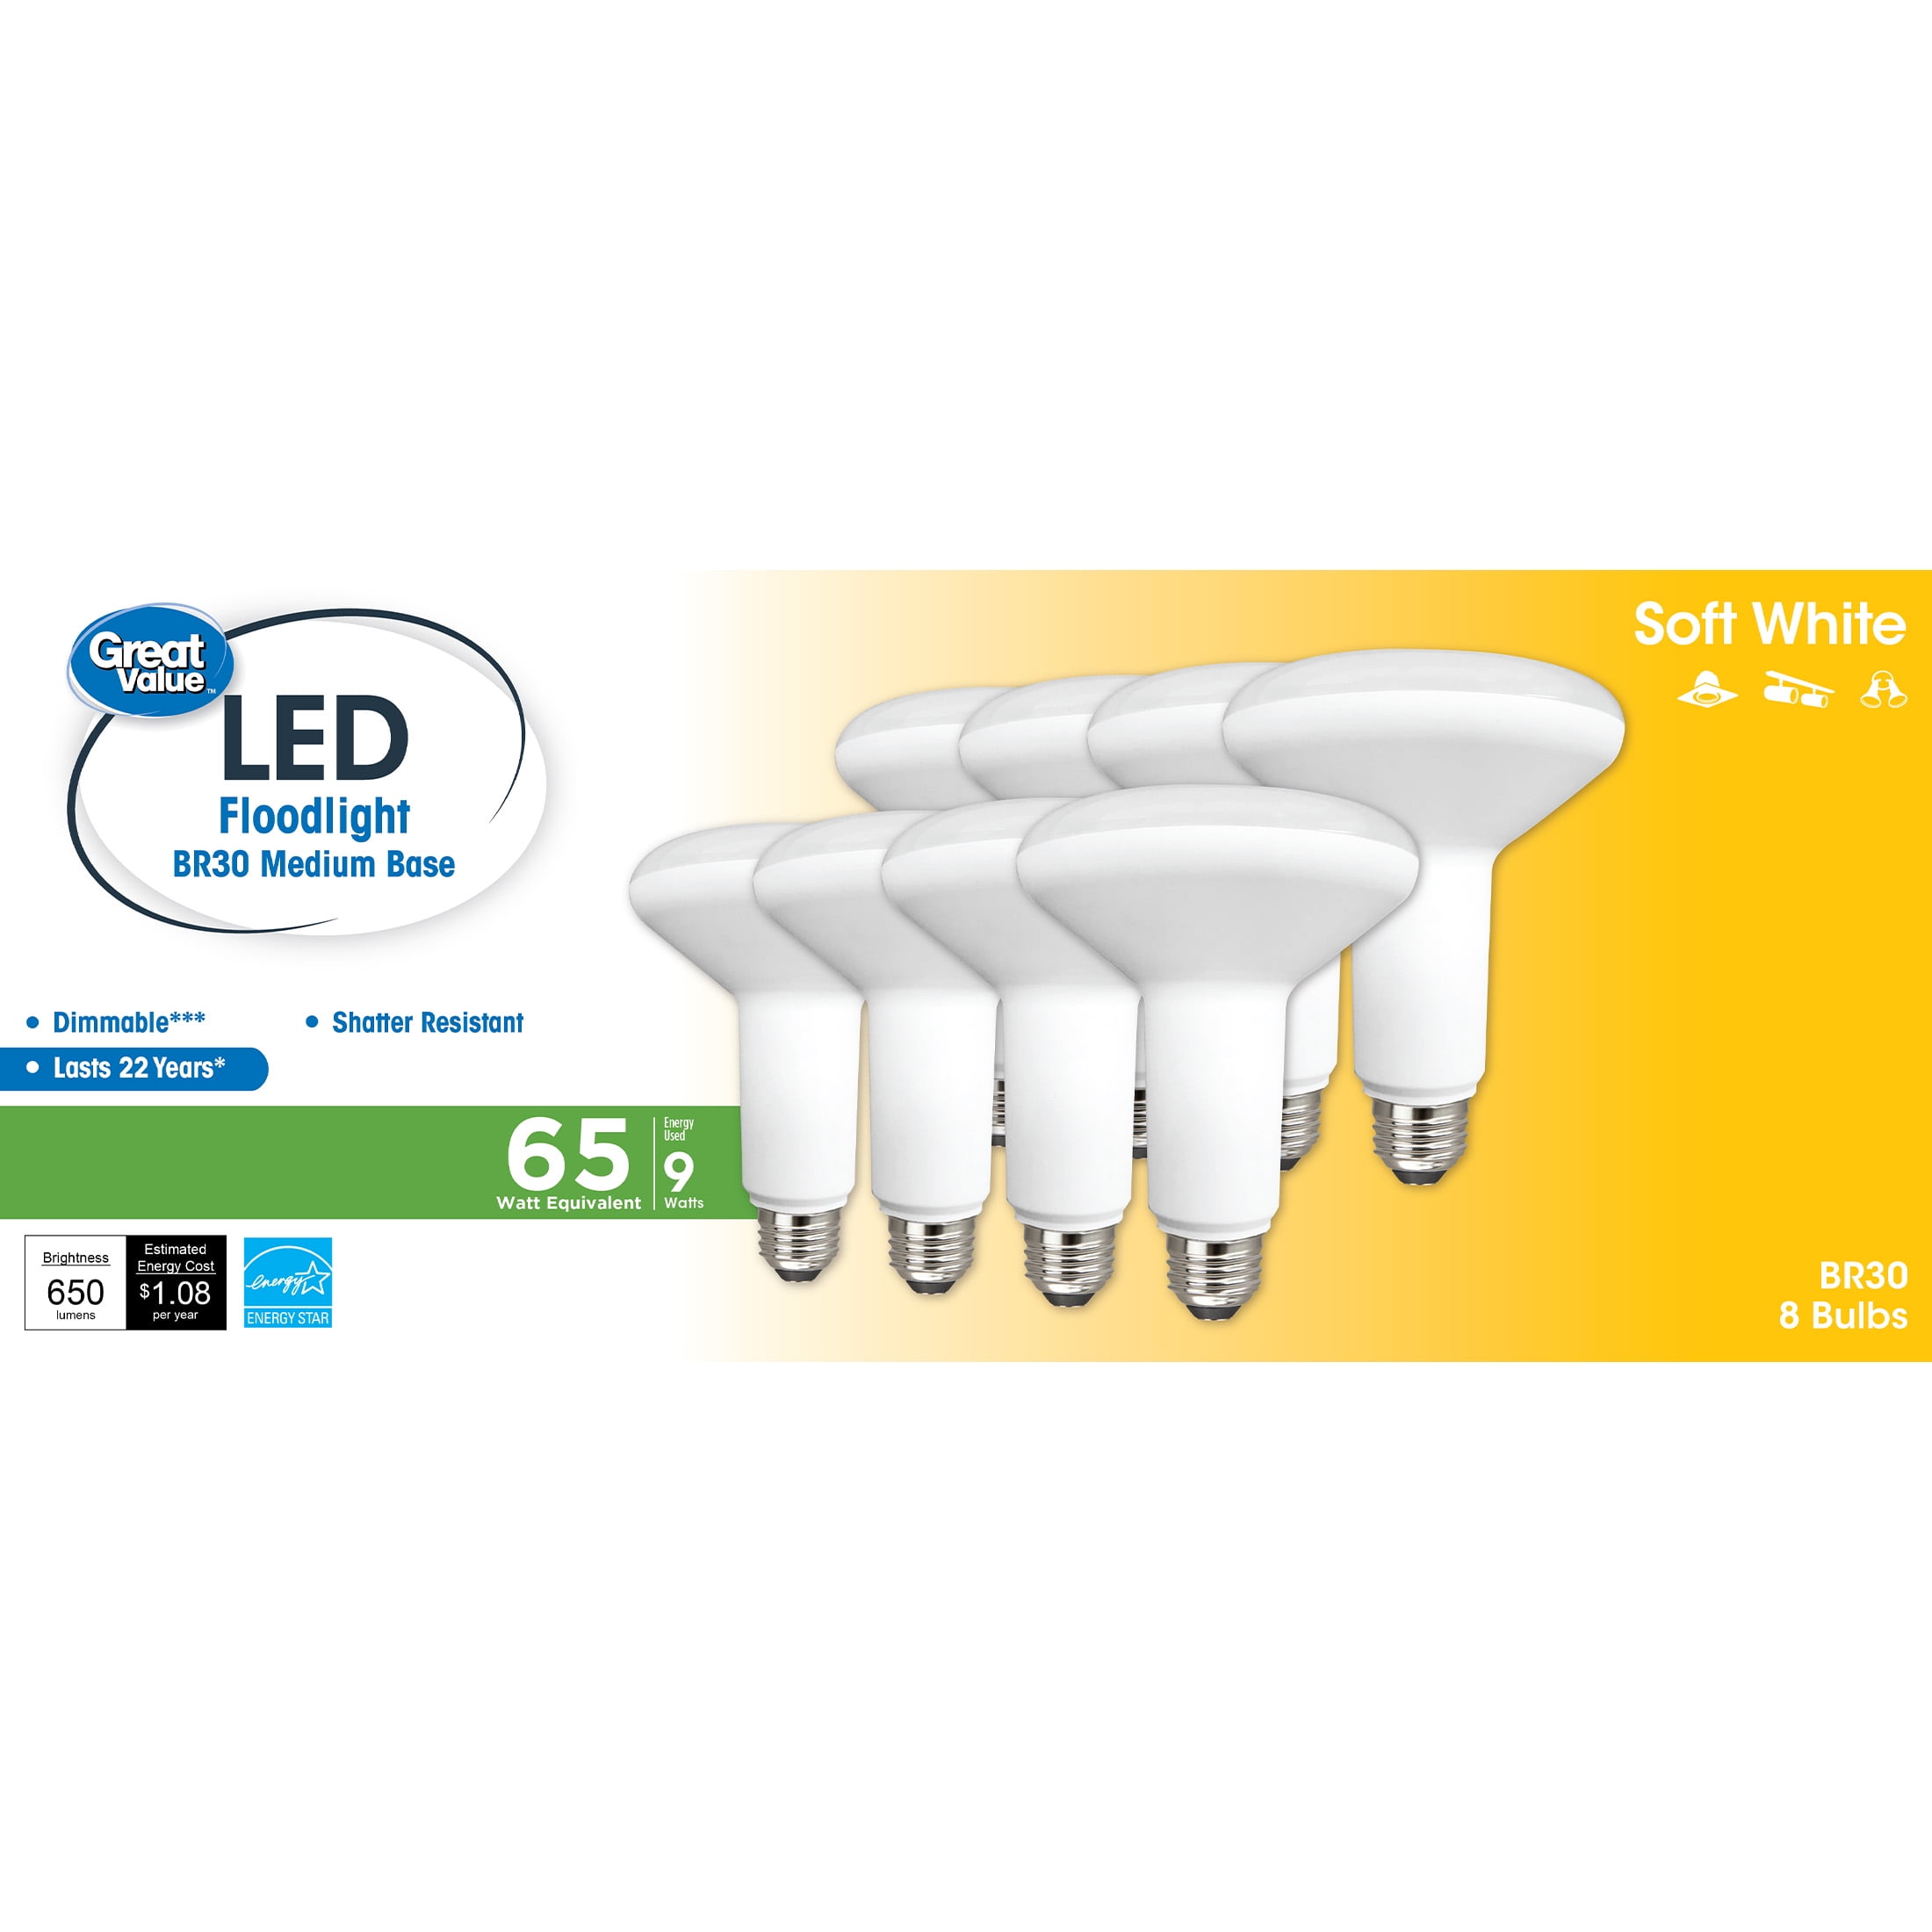 Great Value LED Light Bulb, 9W (65W Equivalent) BR30 Floodlight Lamp E26 Medium Base, Dimmable, Soft White, 8-Pack